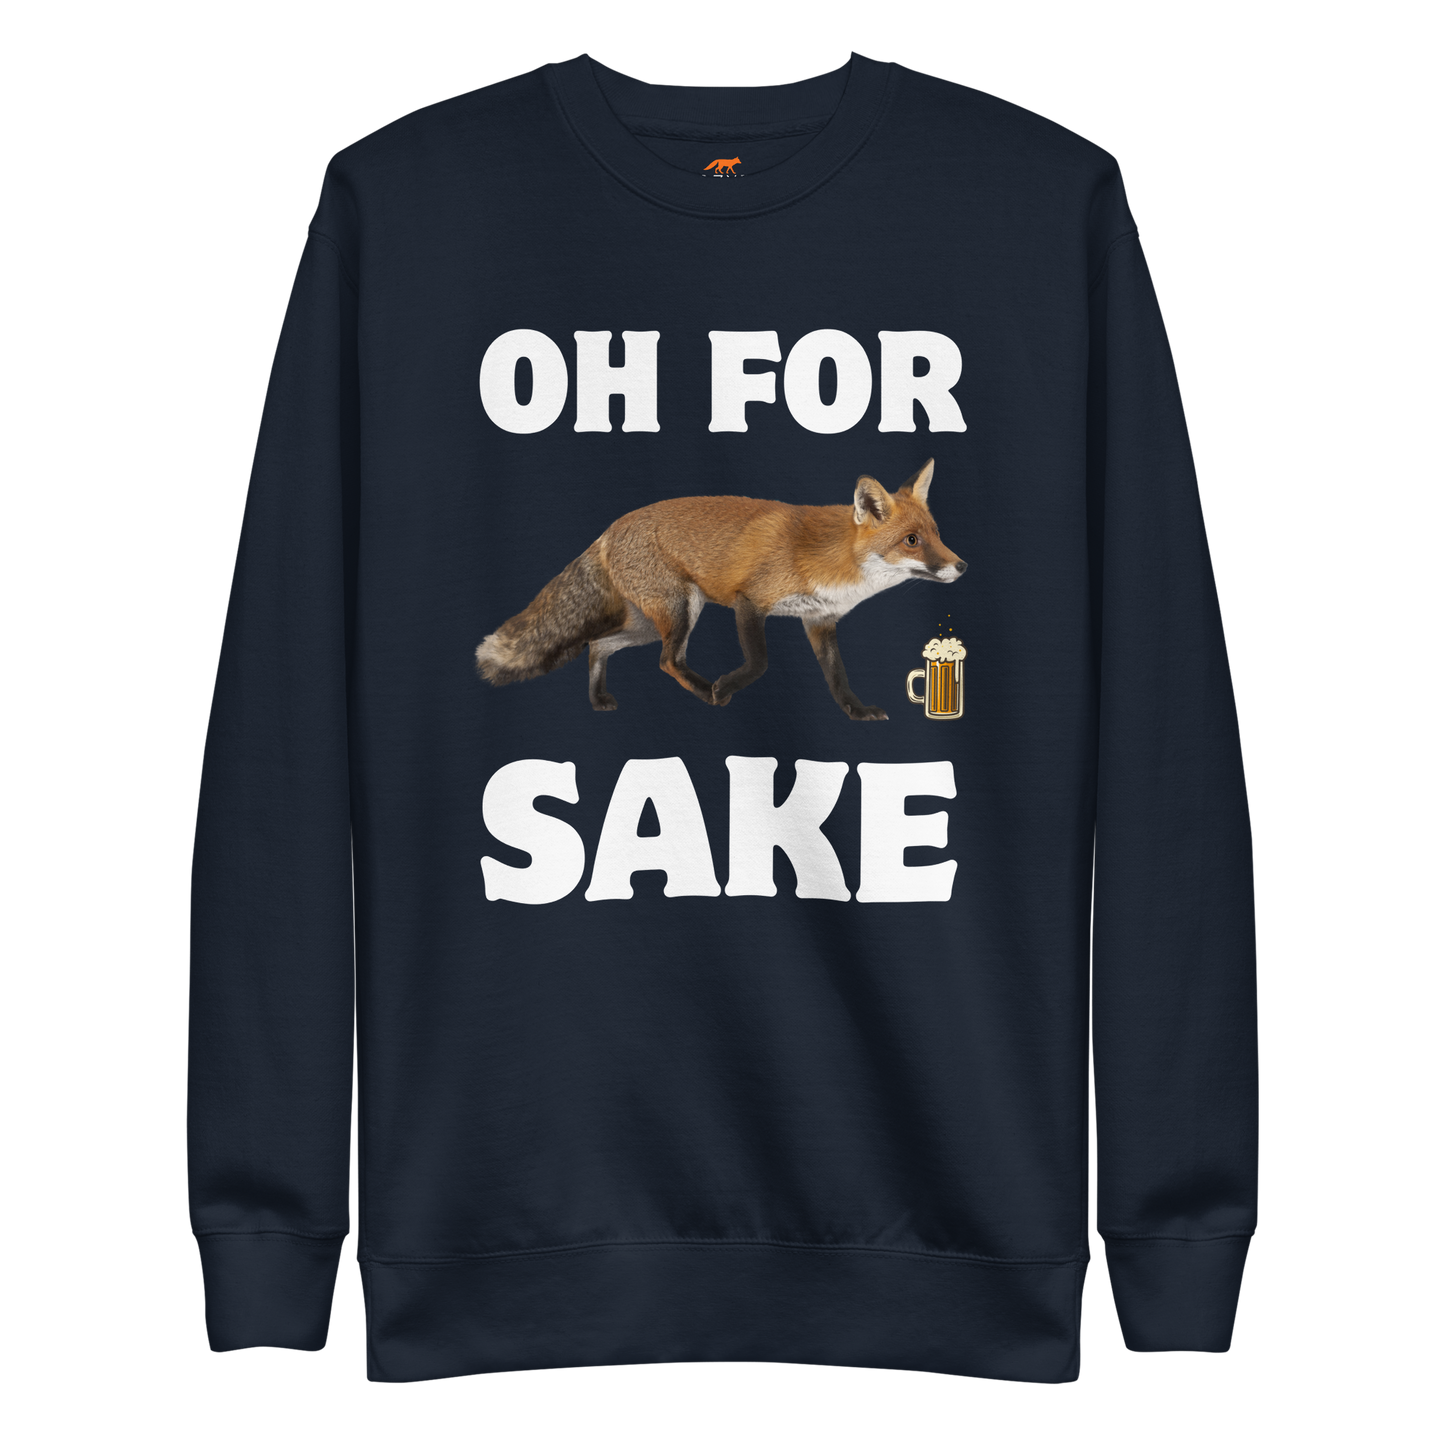 Navy Premium Fox Sweatshirt featuring a Oh For Fox Sake graphic on the chest - Funny Graphic Fox Sweatshirts - Boozy Fox